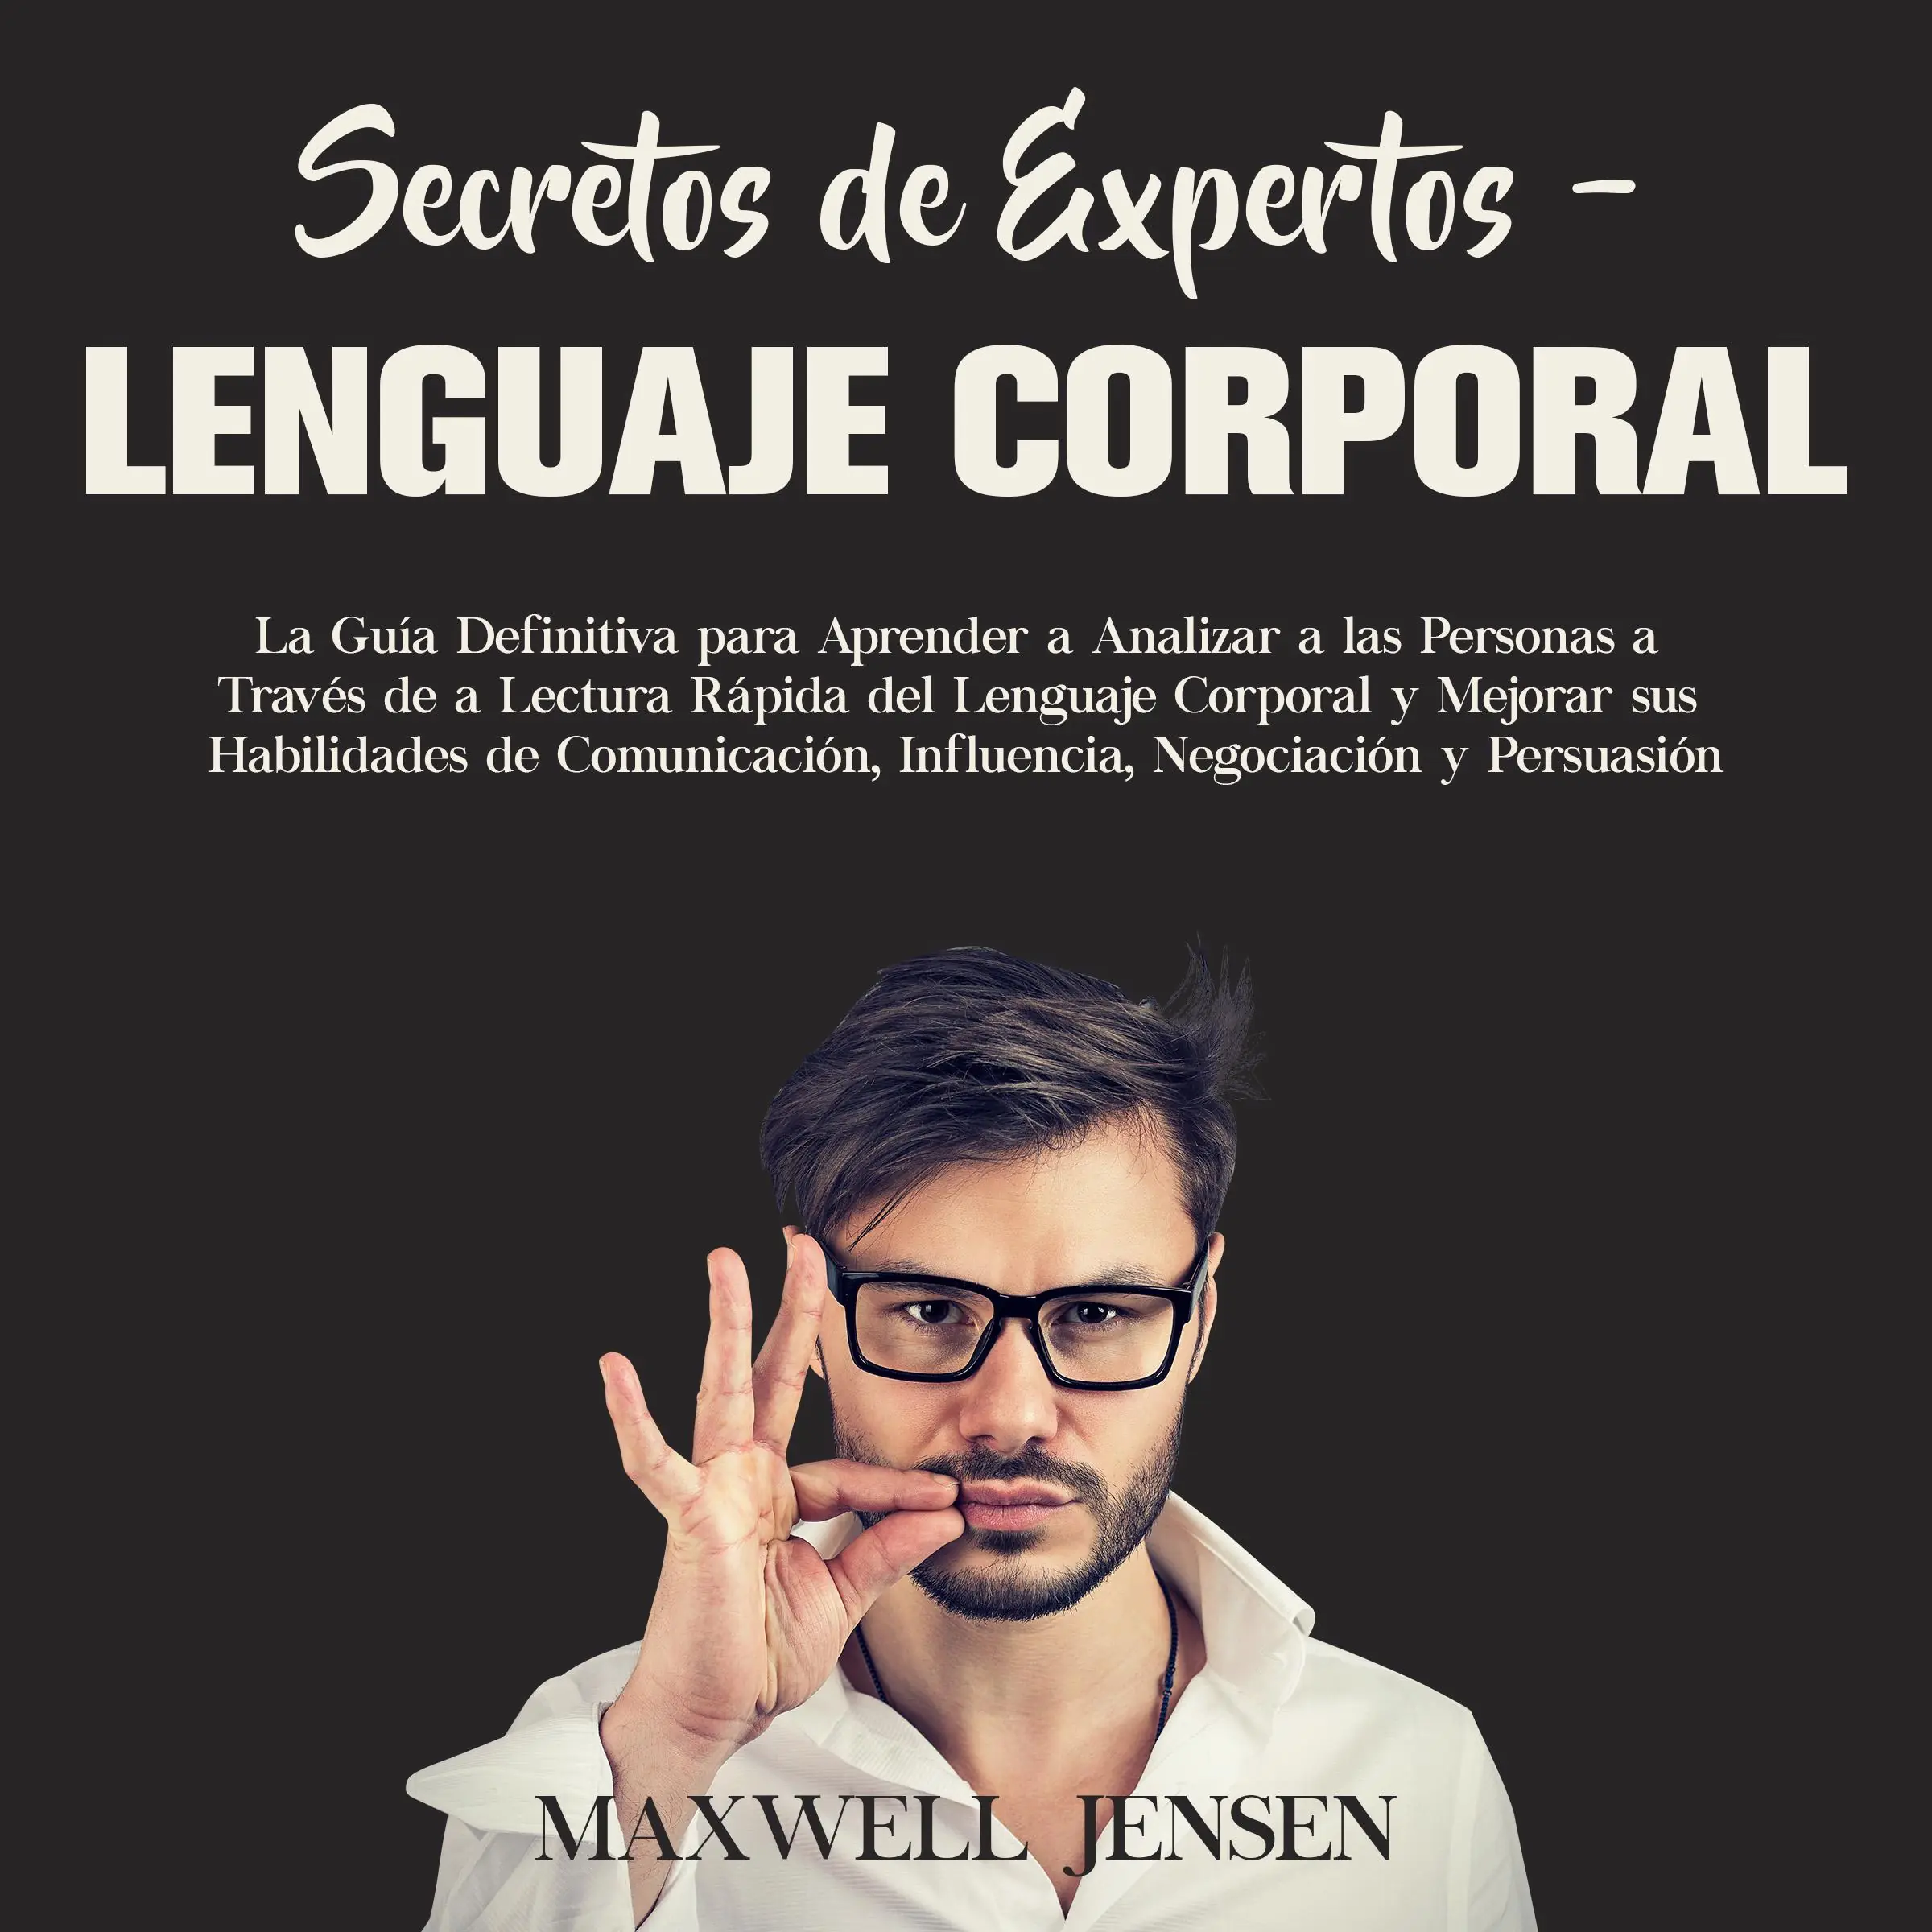 Secretos de Expertos – Lenguaje Corporal Audiobook by Maxwell Jensen